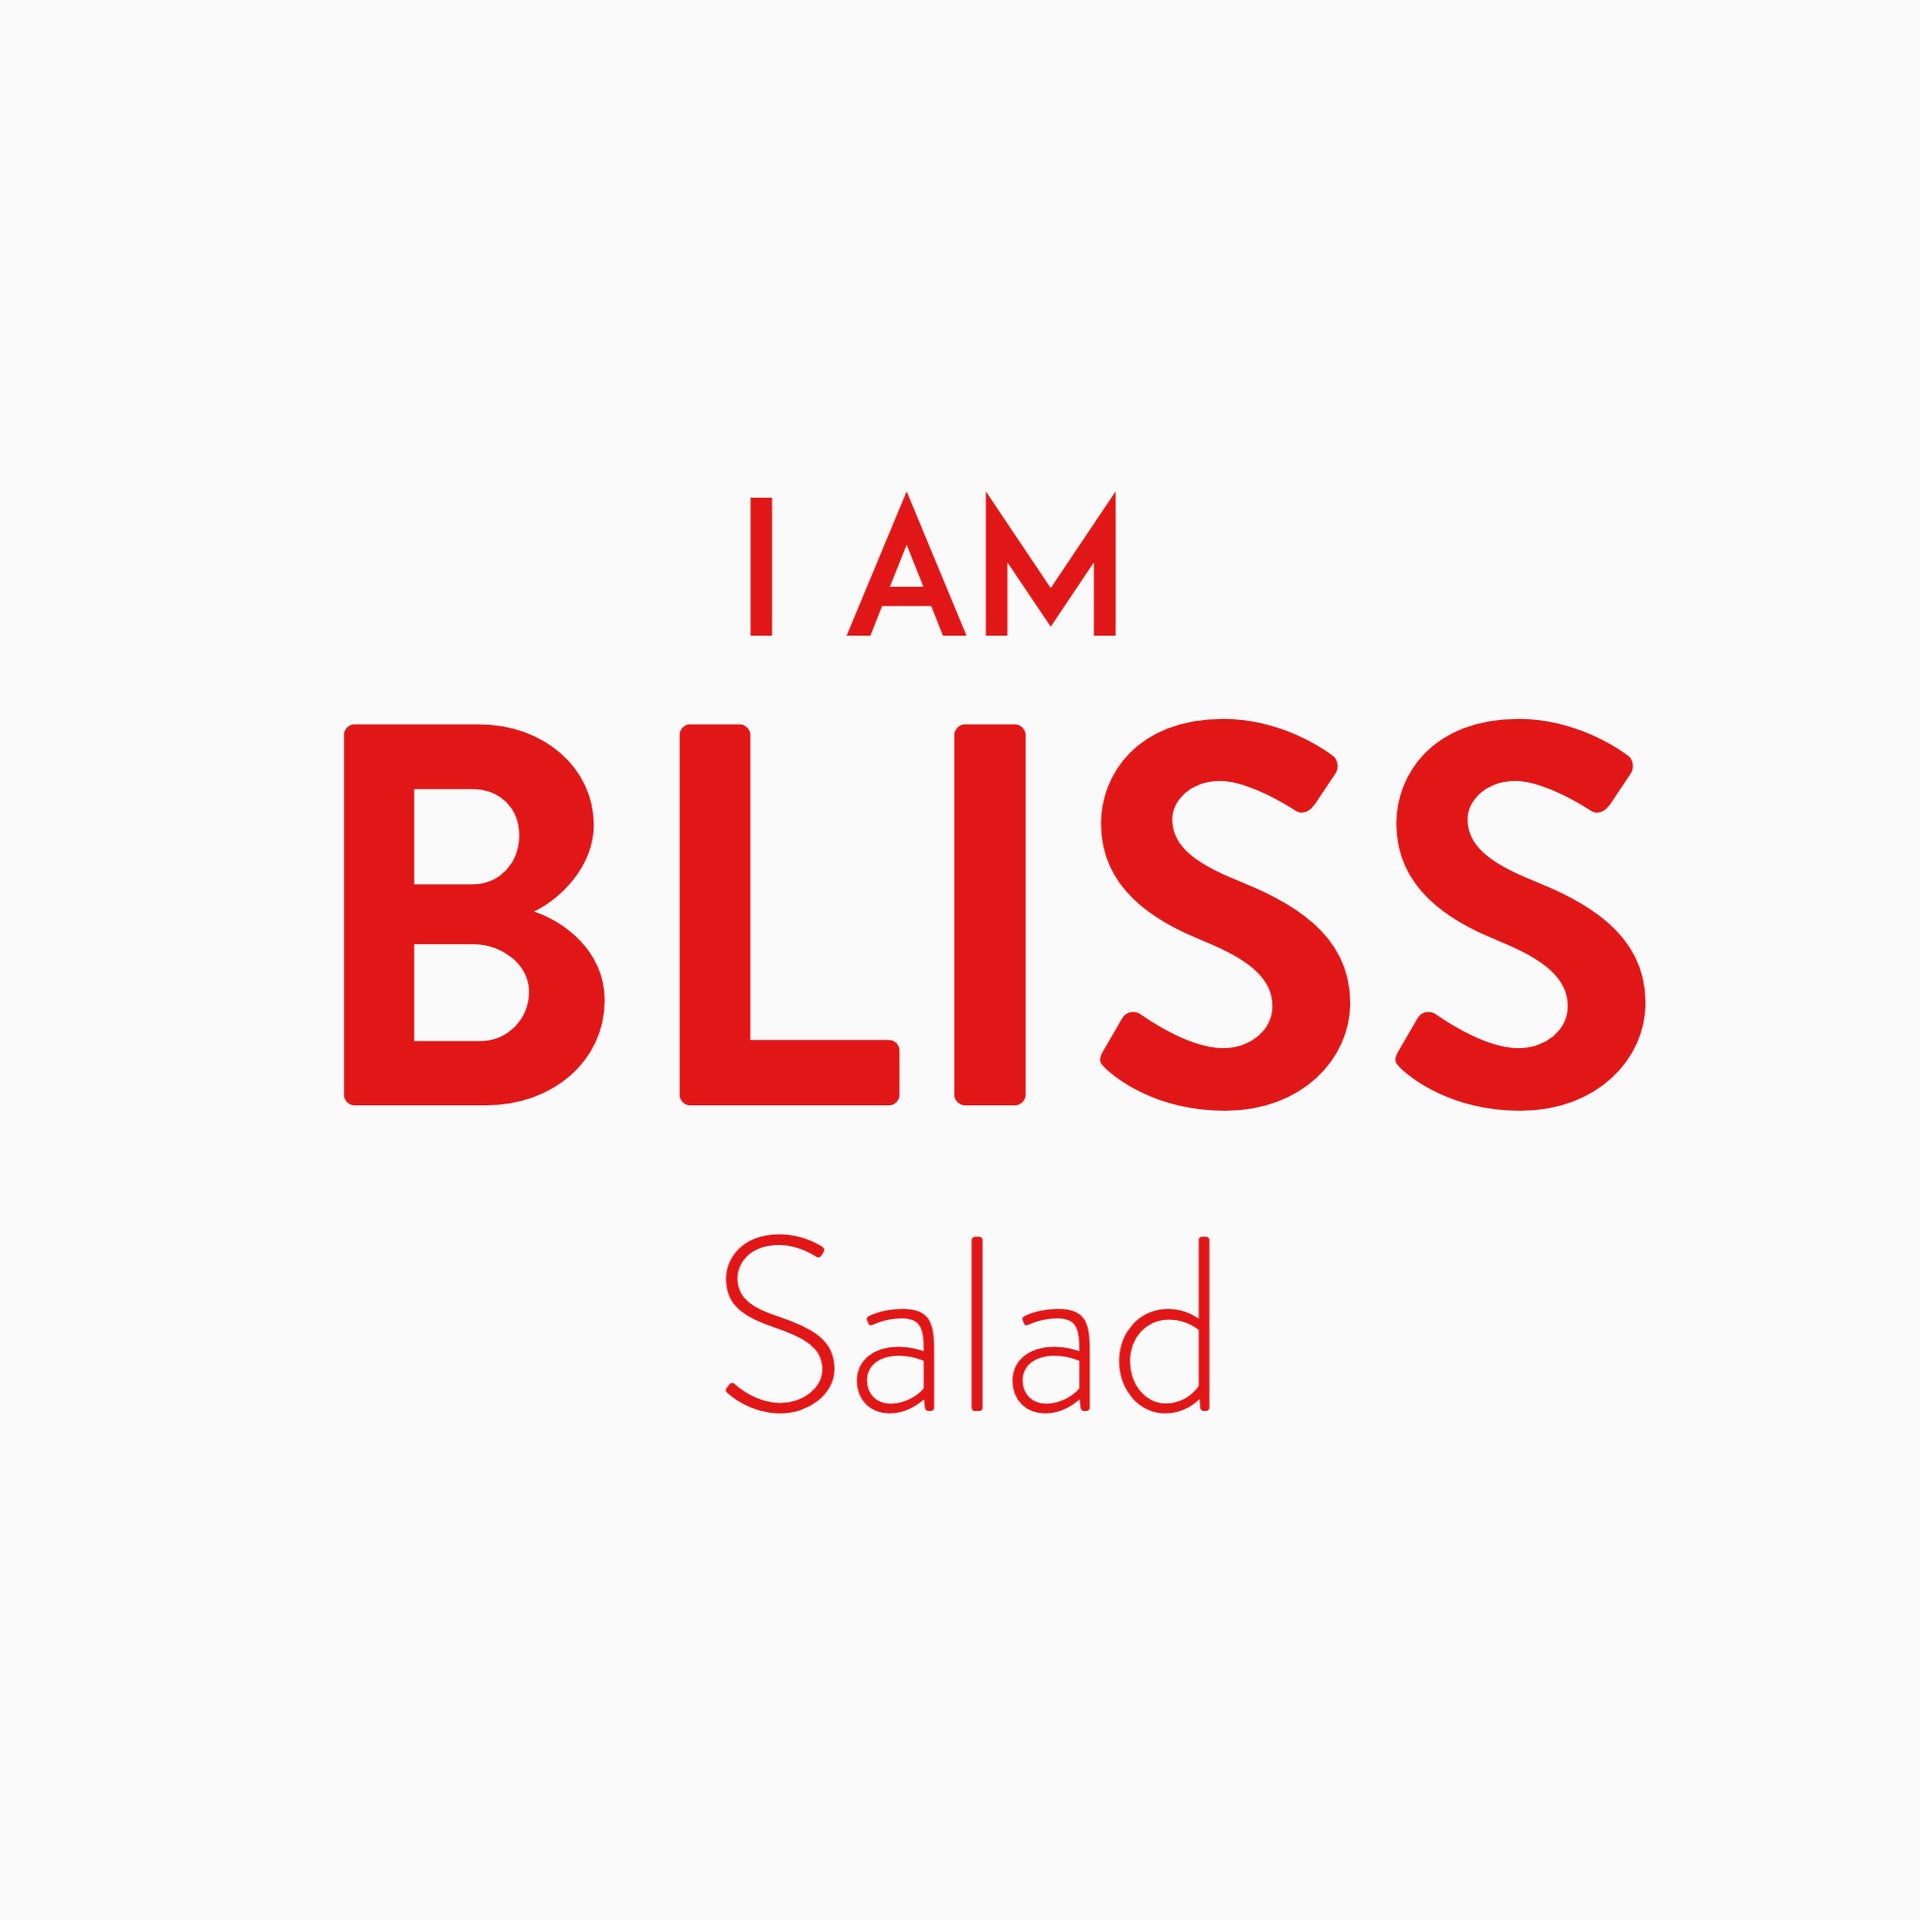 I AM BLISS